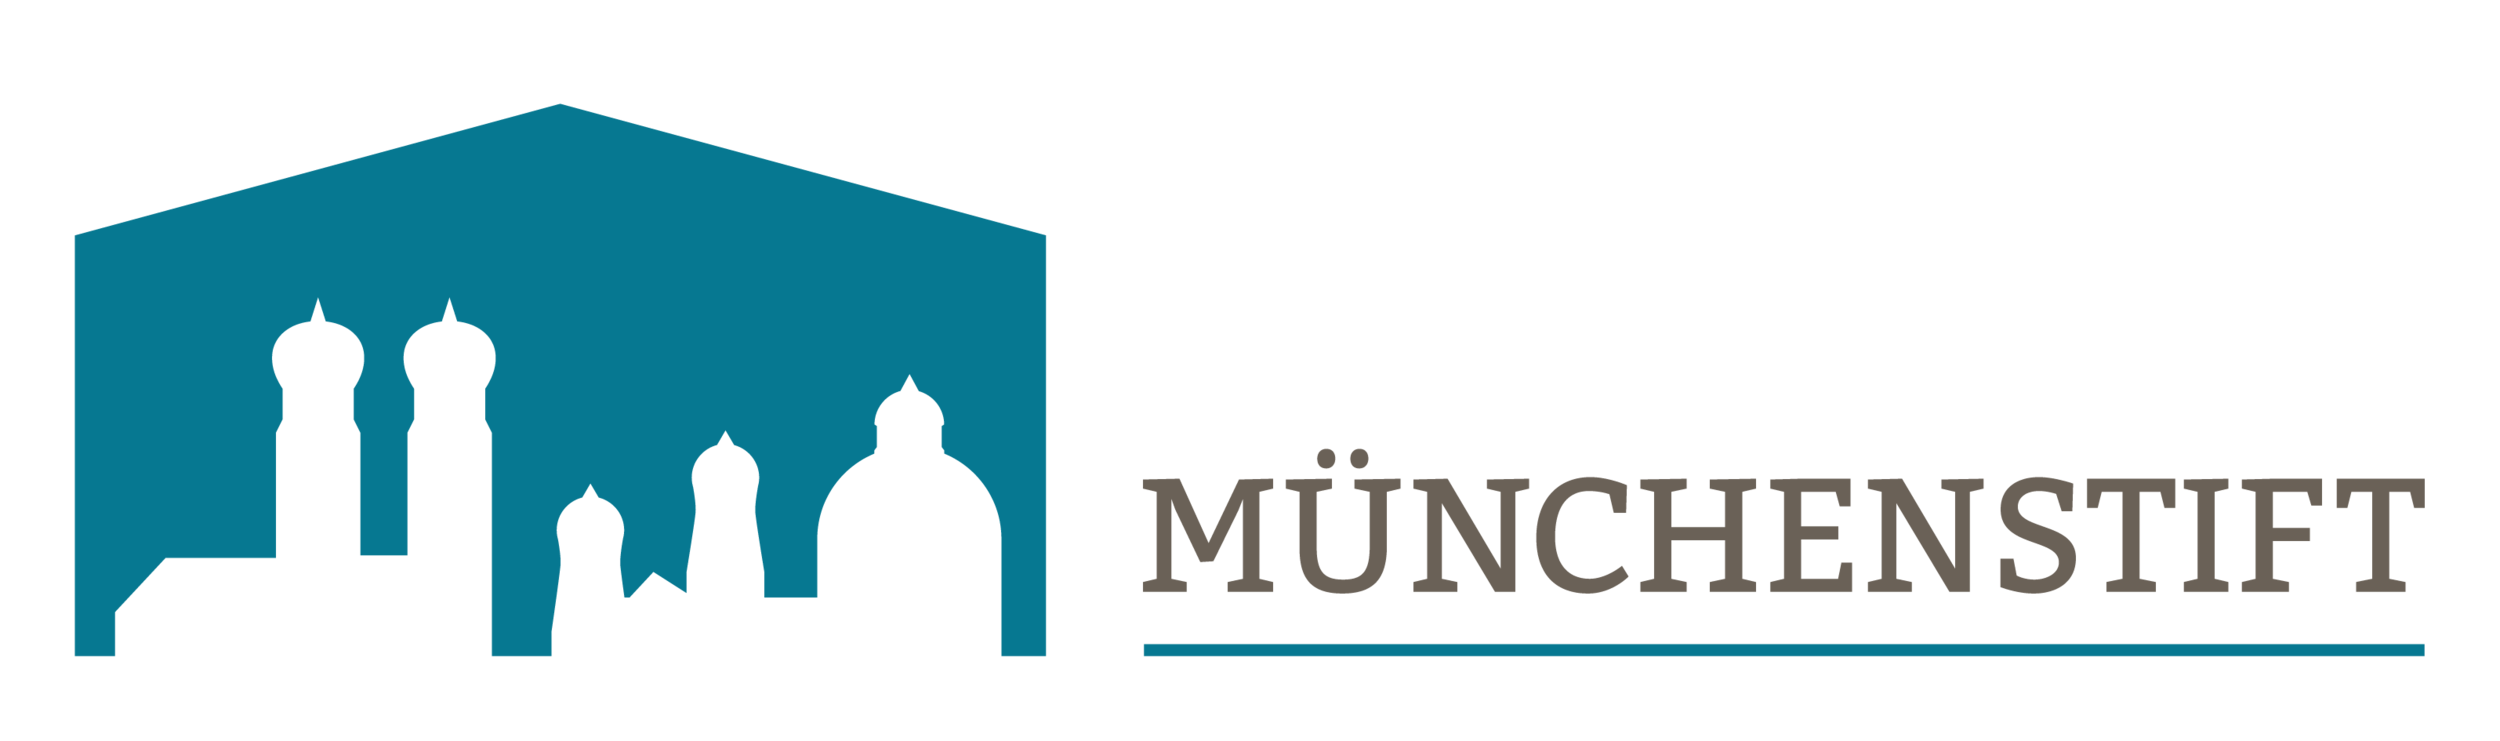 Muenchenstift_logo.png